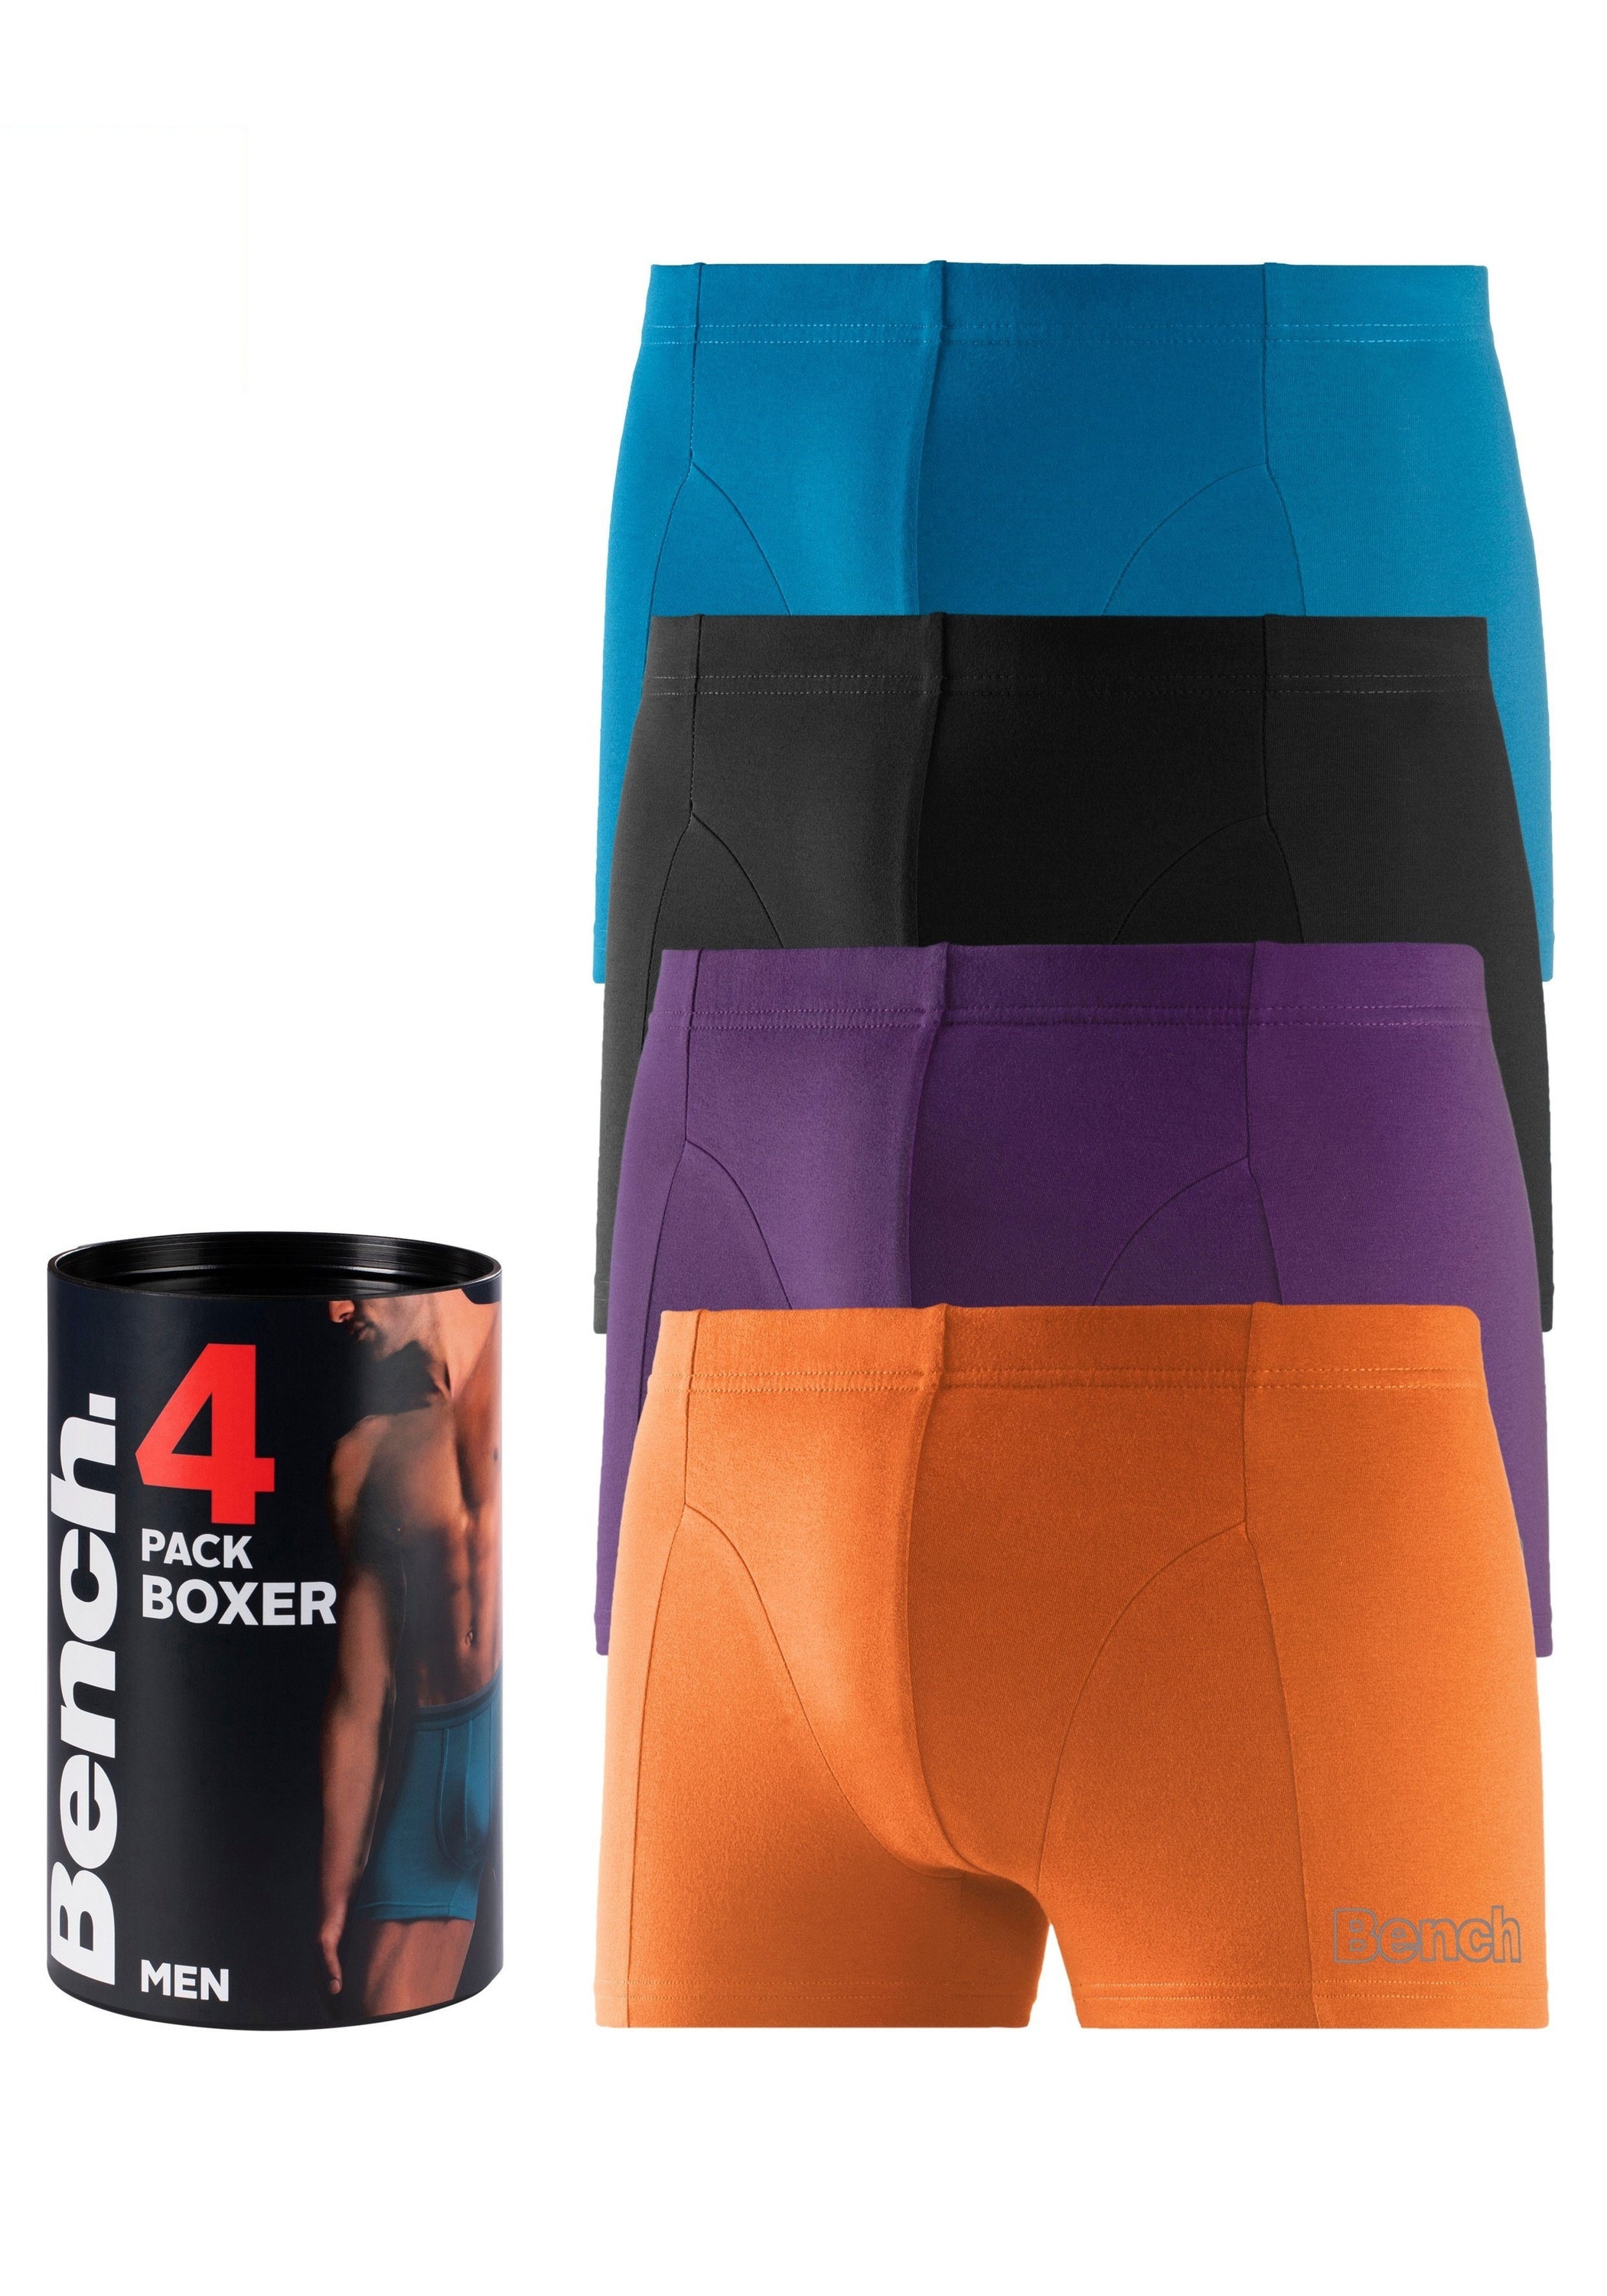 Боксеры Bench Boxer, цвет schwarz, türkis, orange, lila